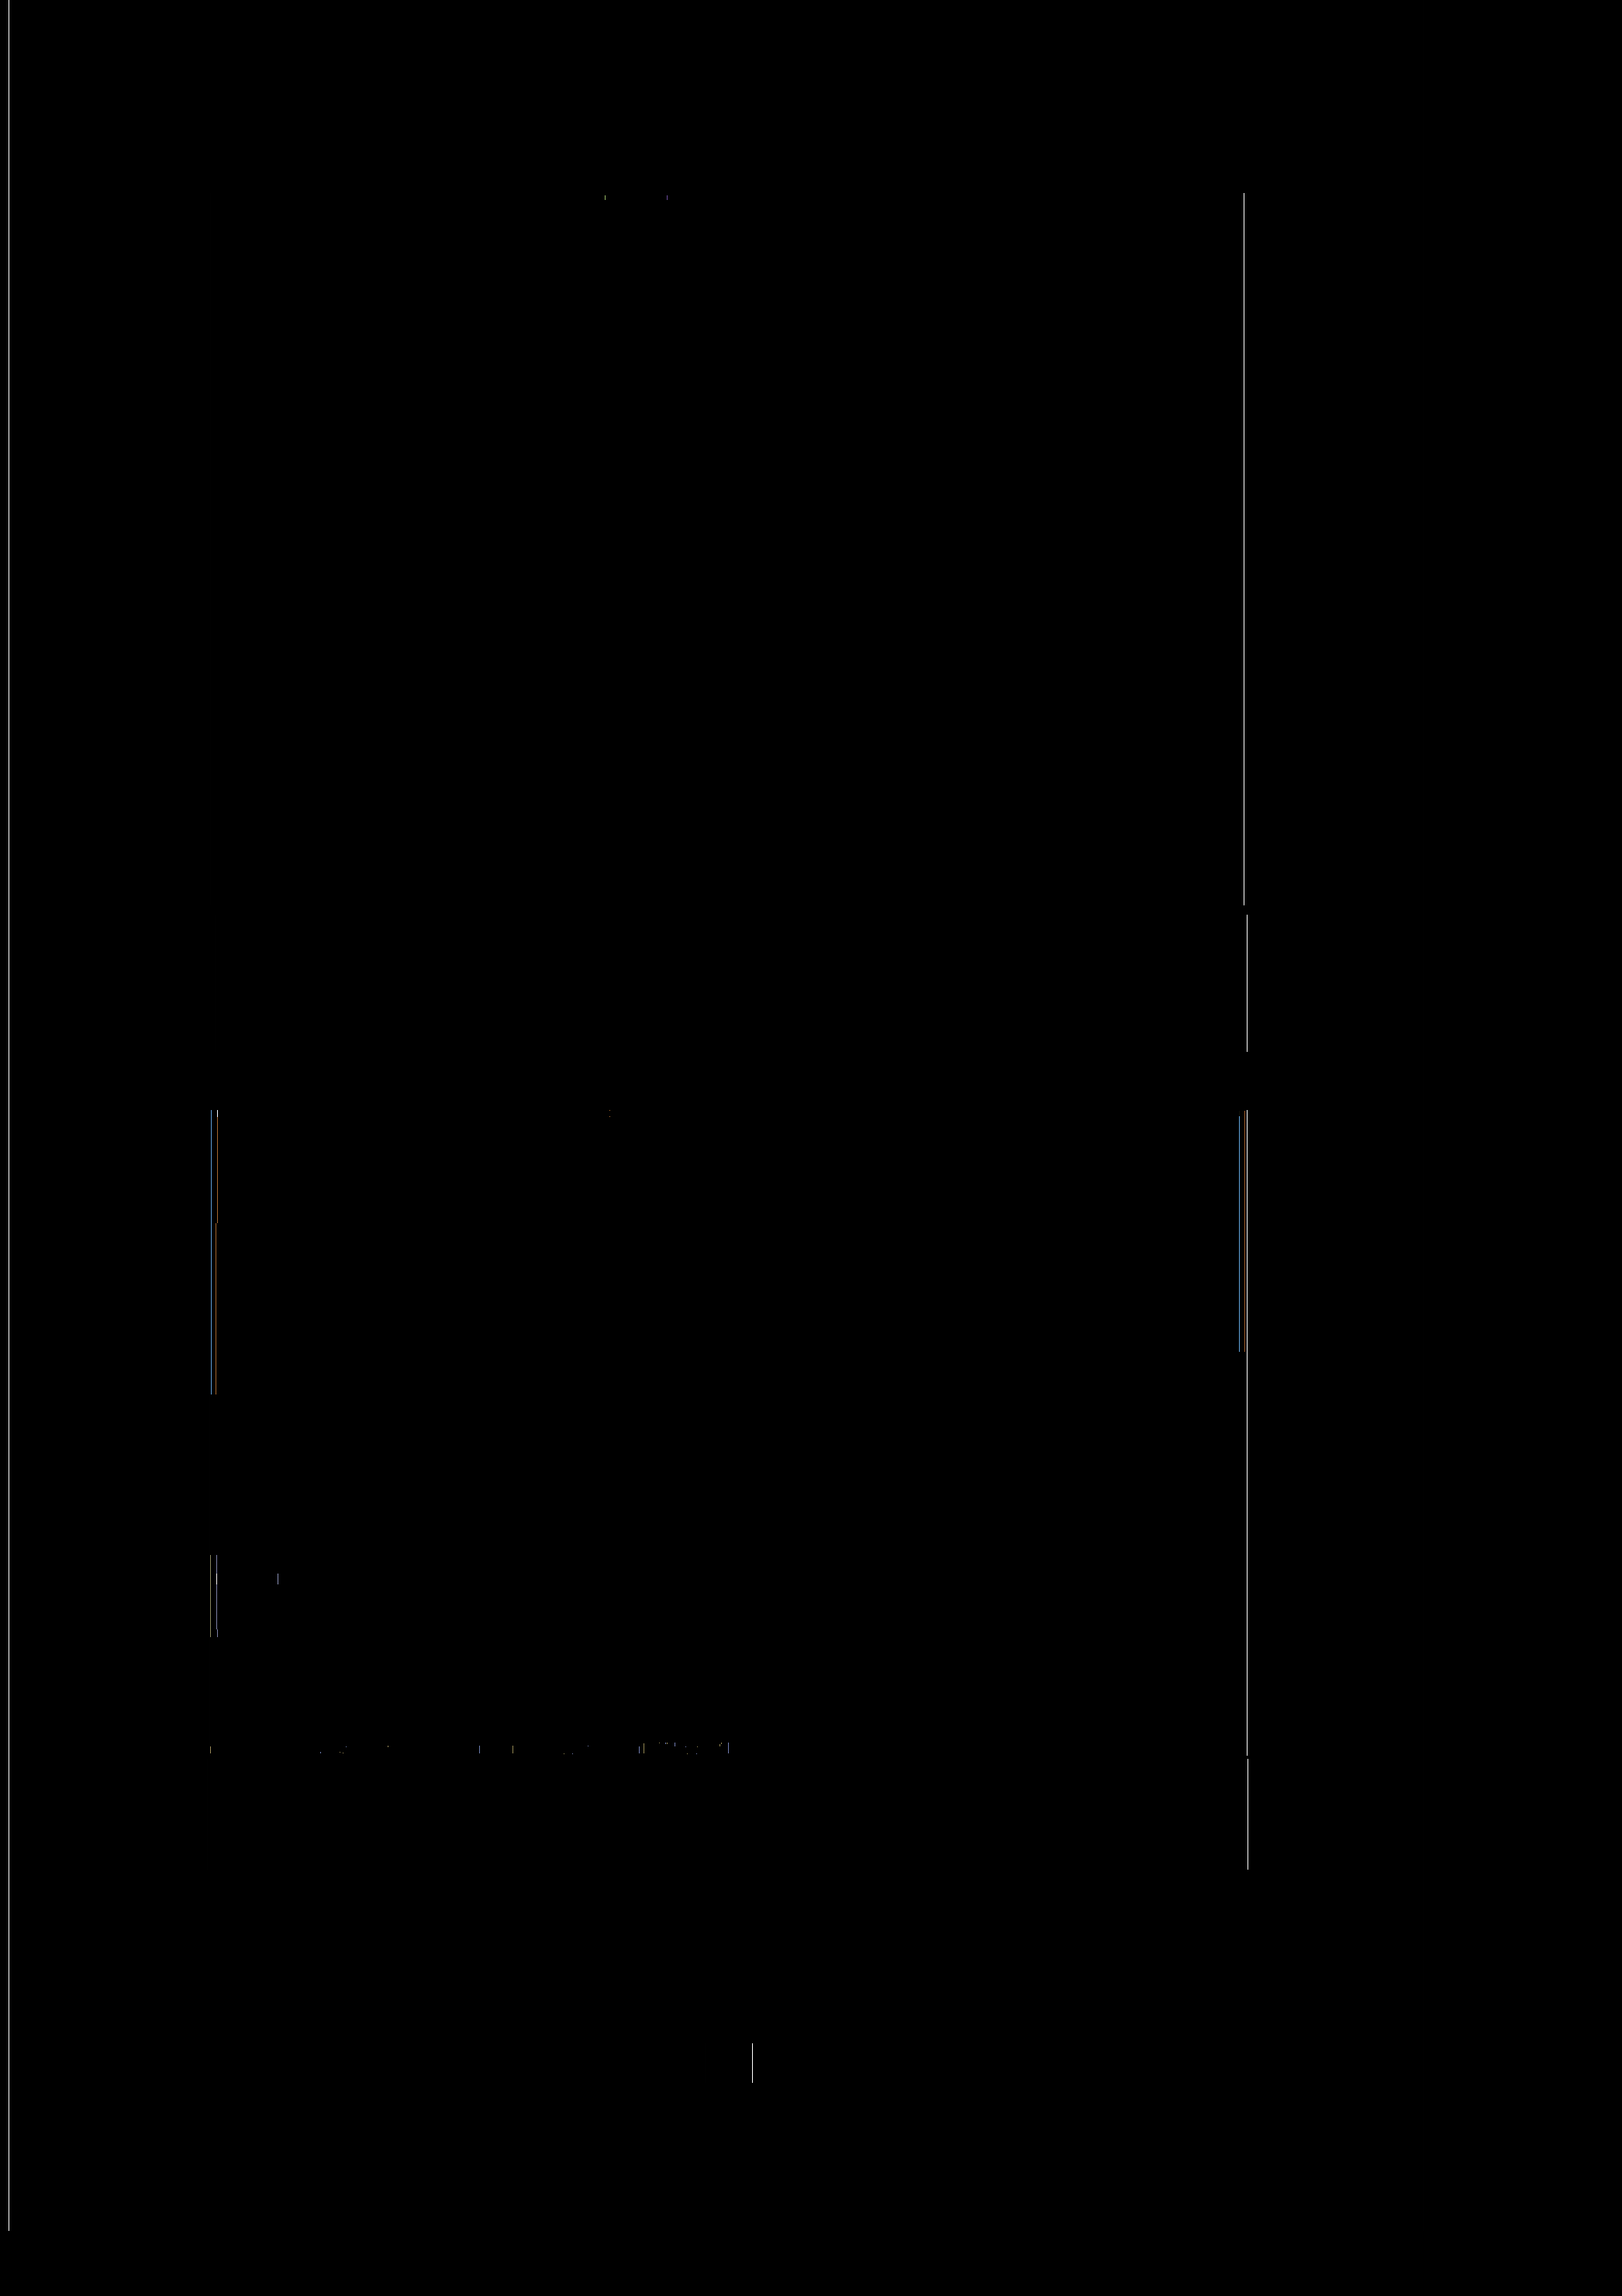 Figur 2. Koral-Hvidtjørn (Crataegus rhipidophylla). Blade og frugtstand. Eremitagesletten, Jægersborg Dyrehave. Foto: K.I. Christensen. - Crataegus rhipidophylla. Leaves and infructescence.